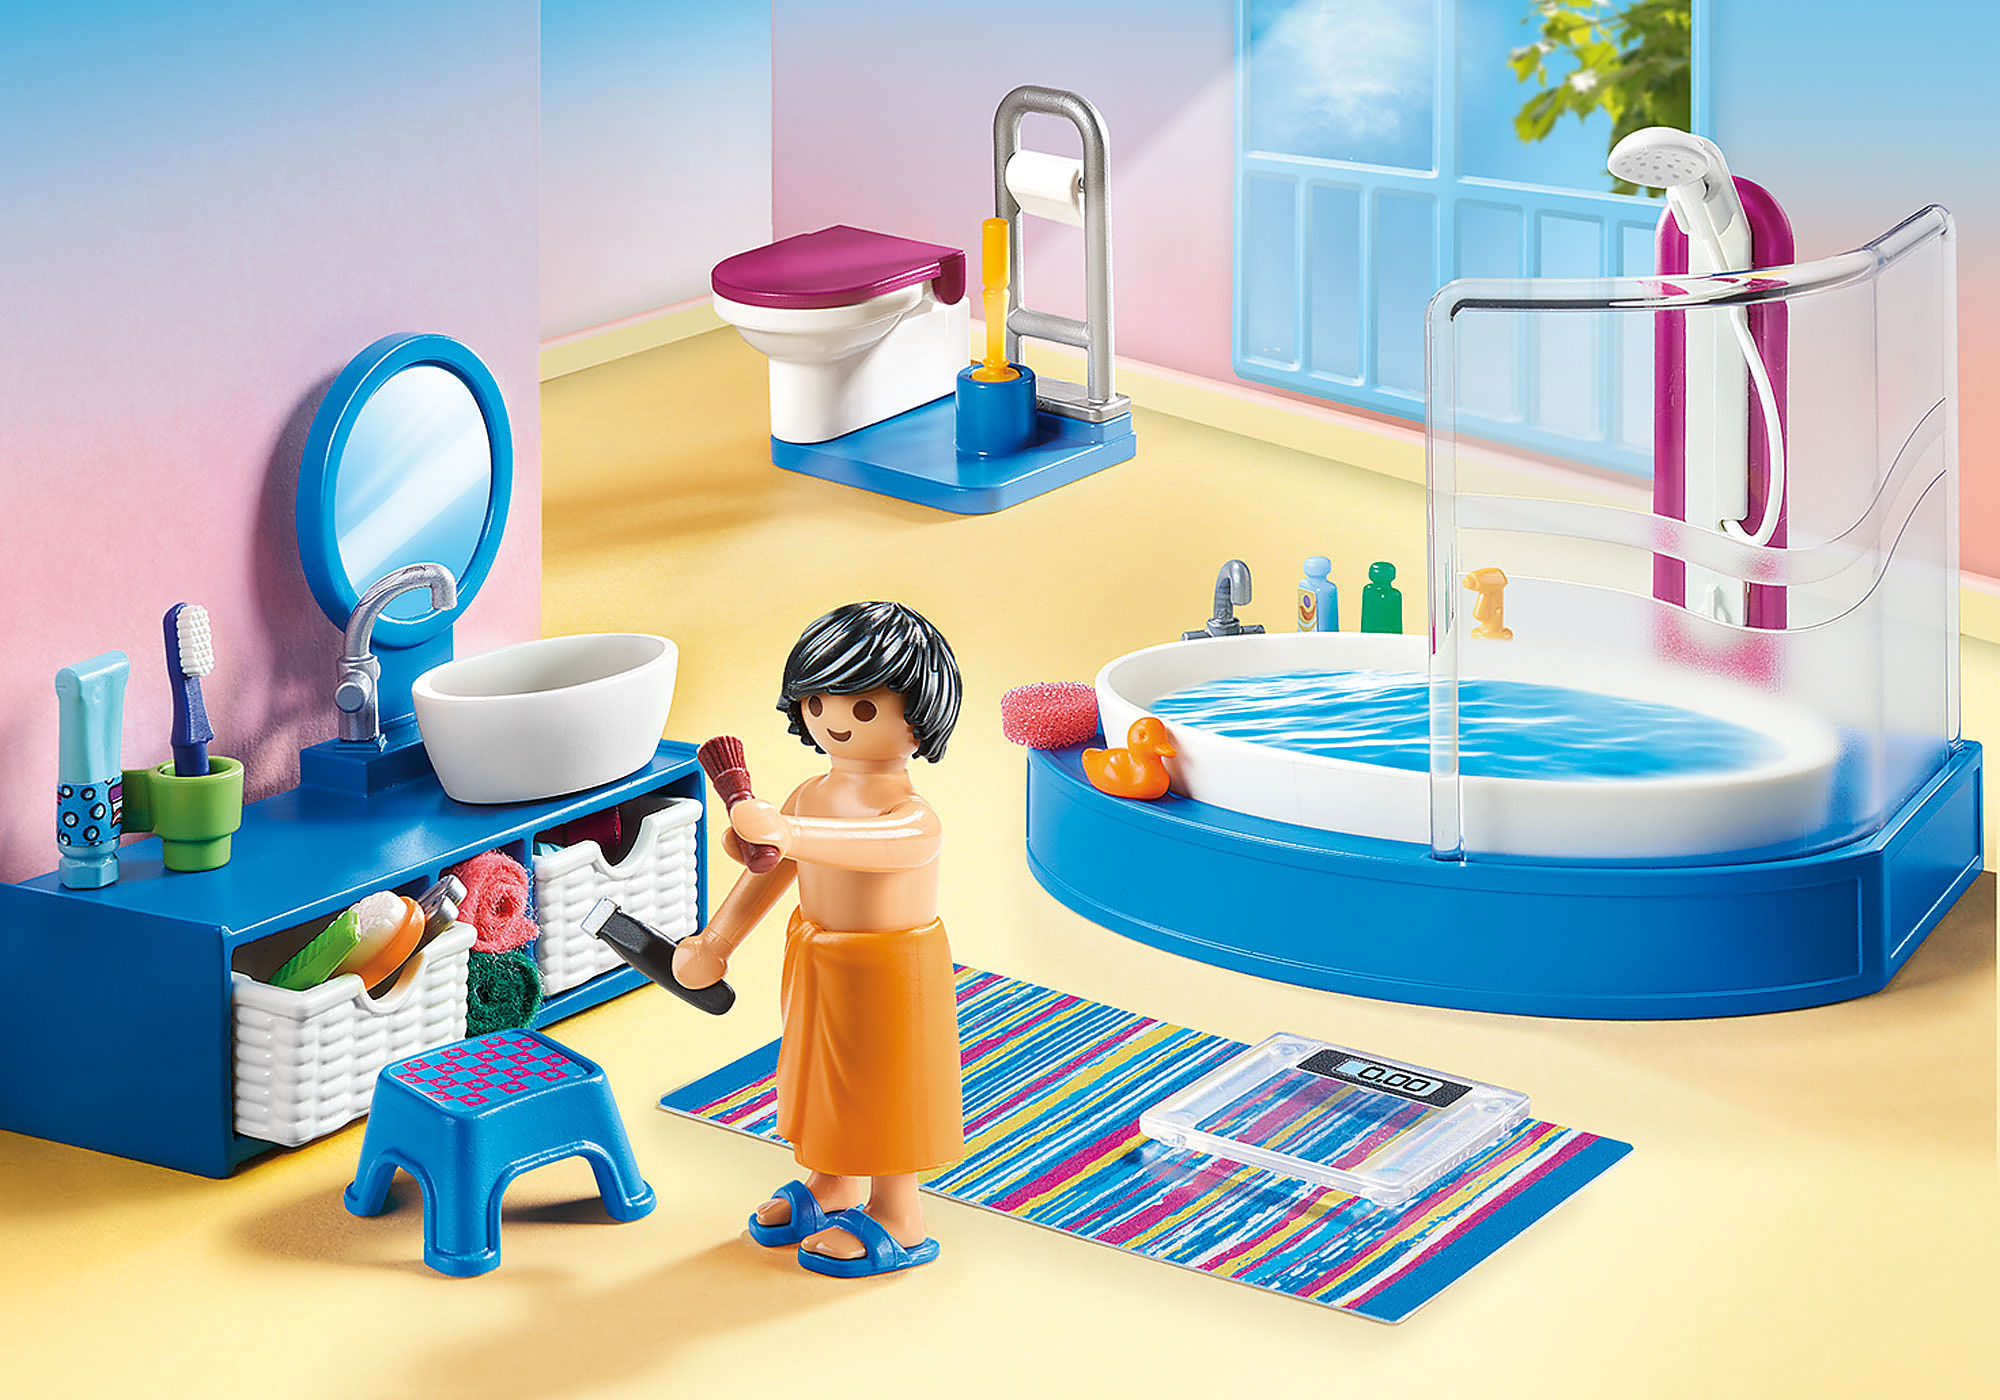 Playmobil salle de bain moderne